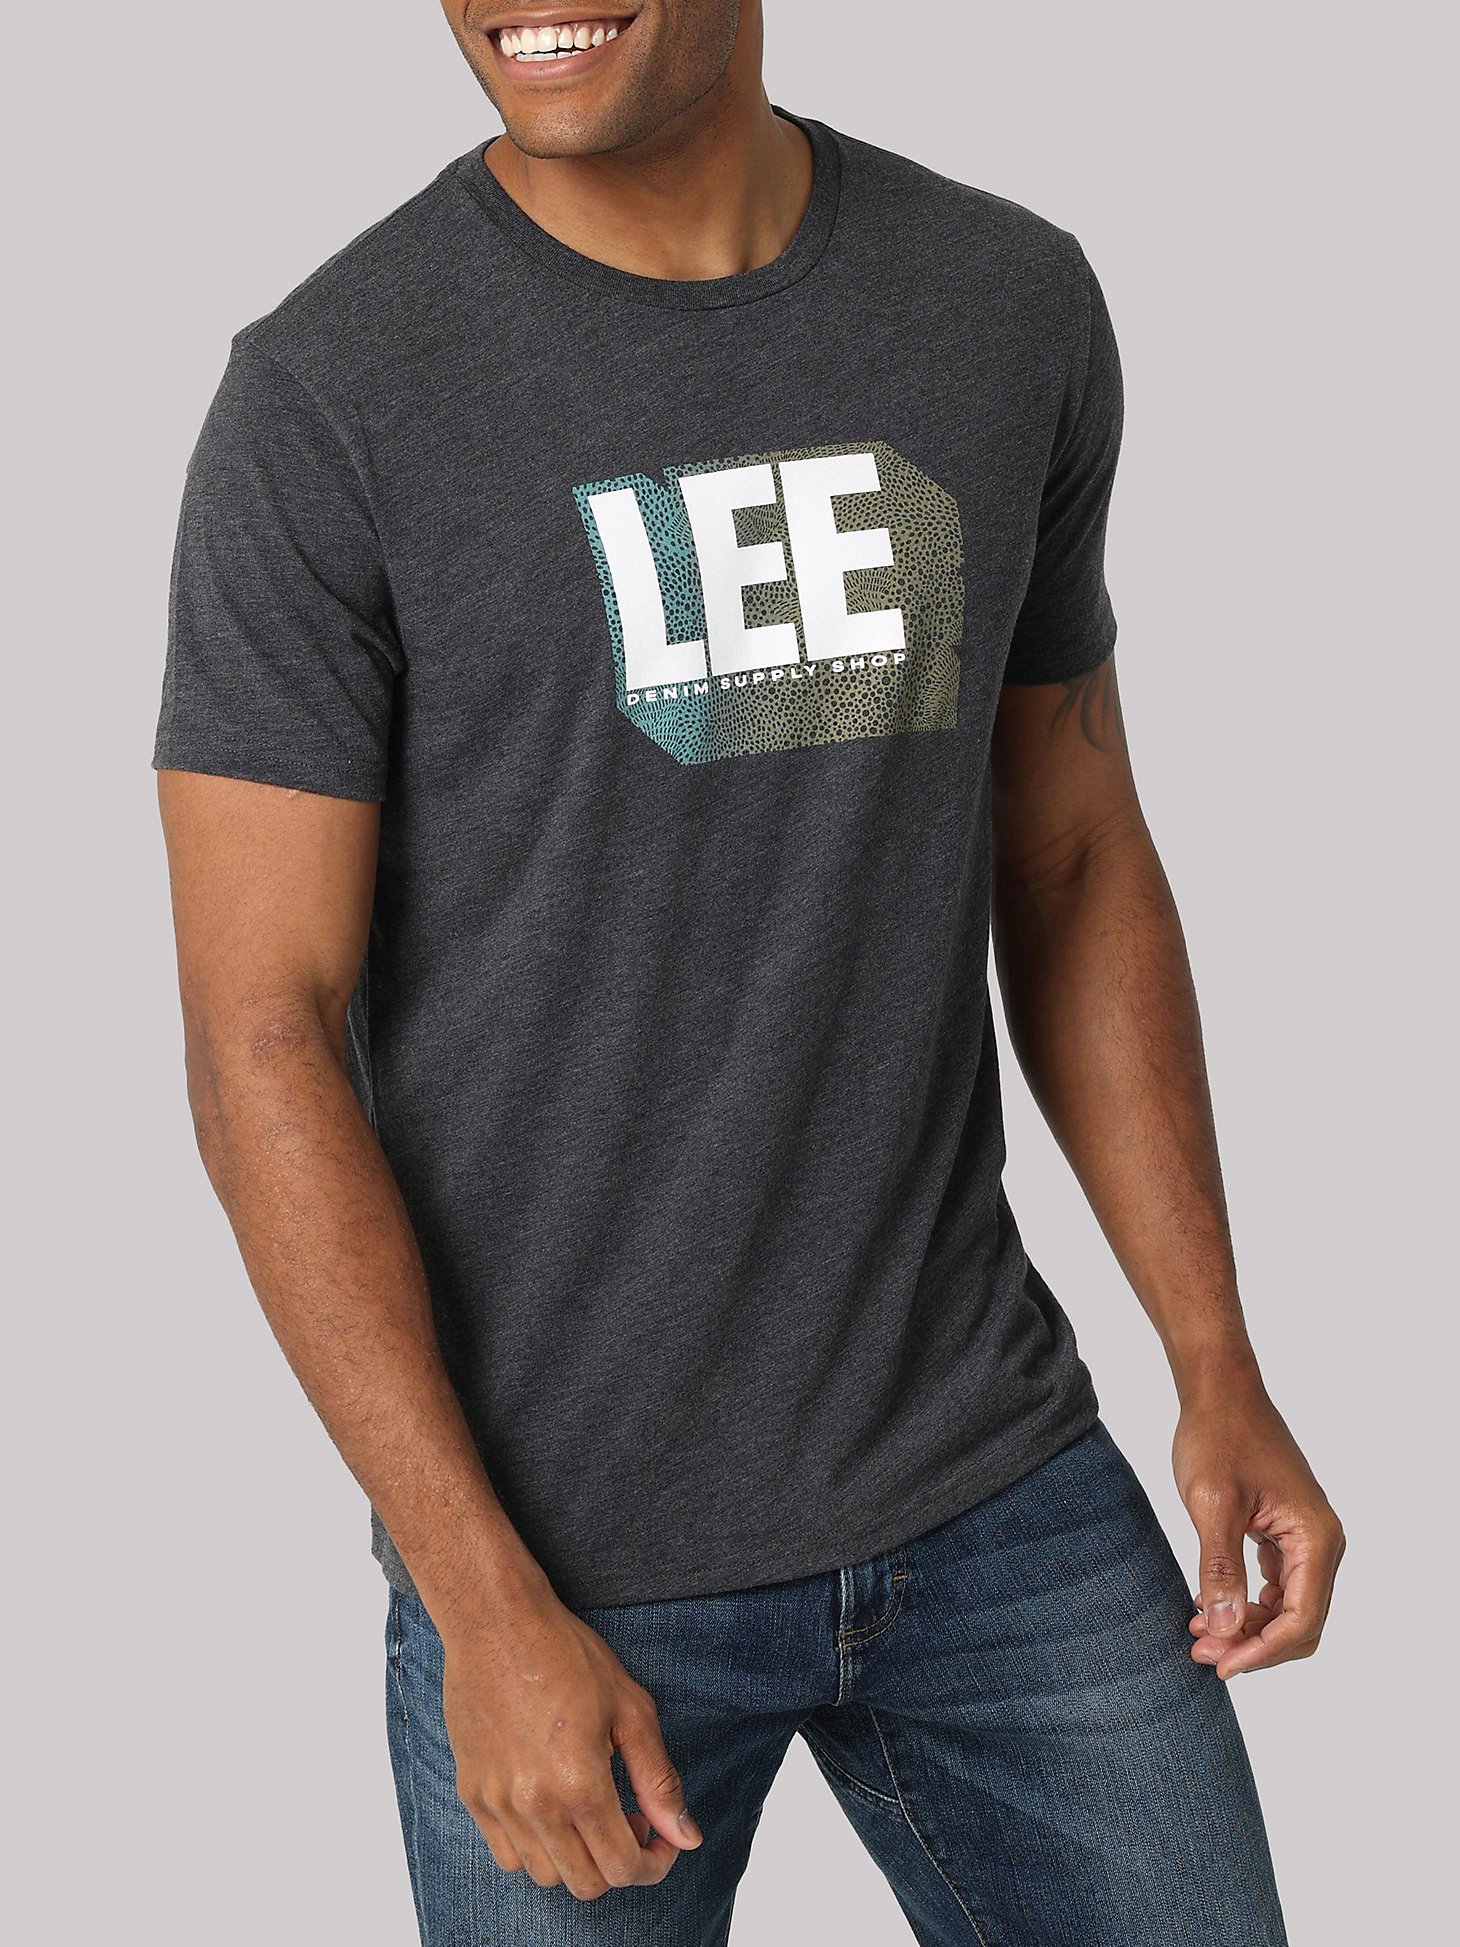 Men's Lee Box Logo Tee in Black Heather main view